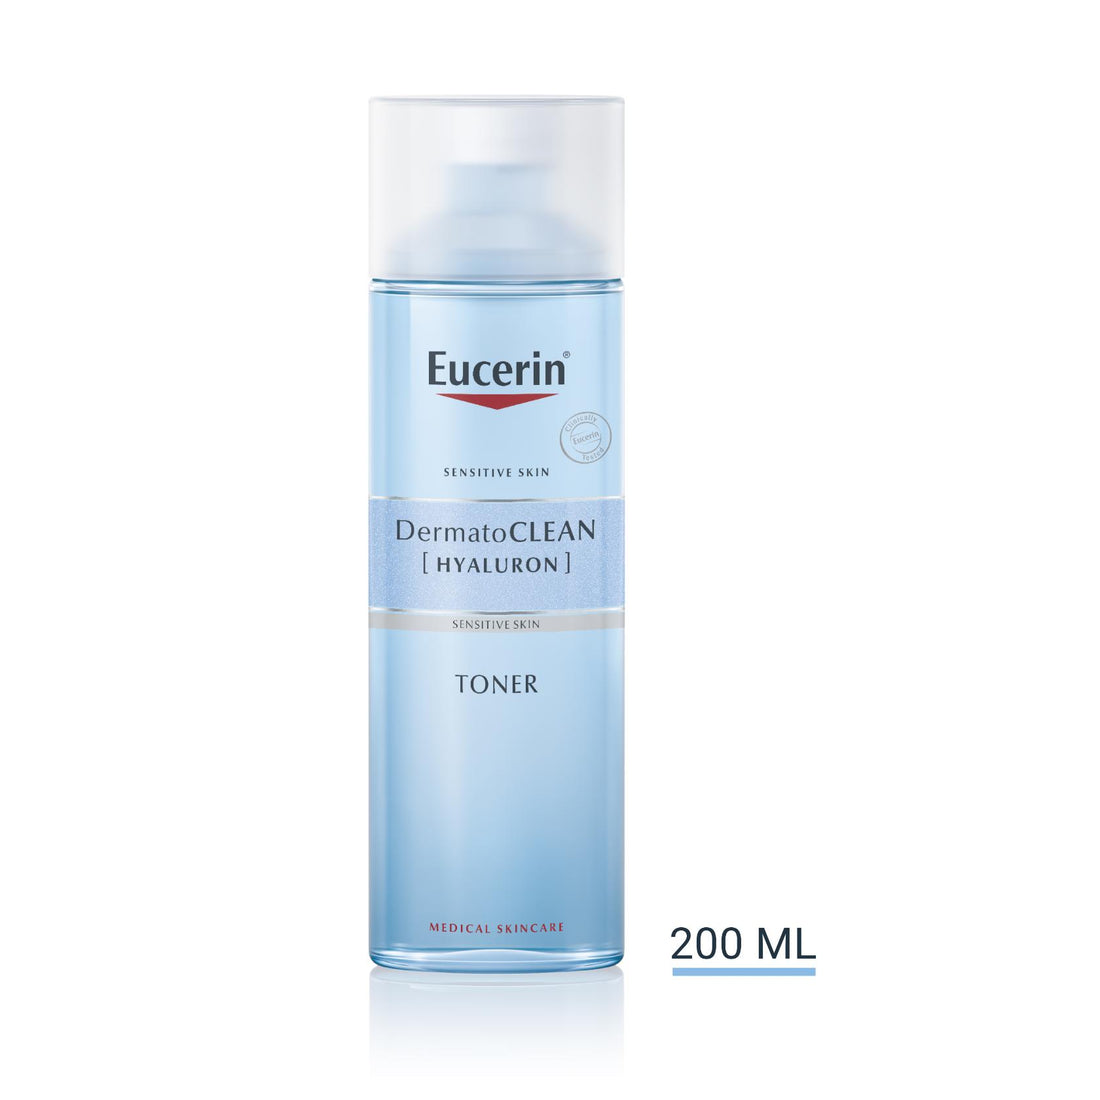 Eucerin DermatoClean Facial Toner 200ml